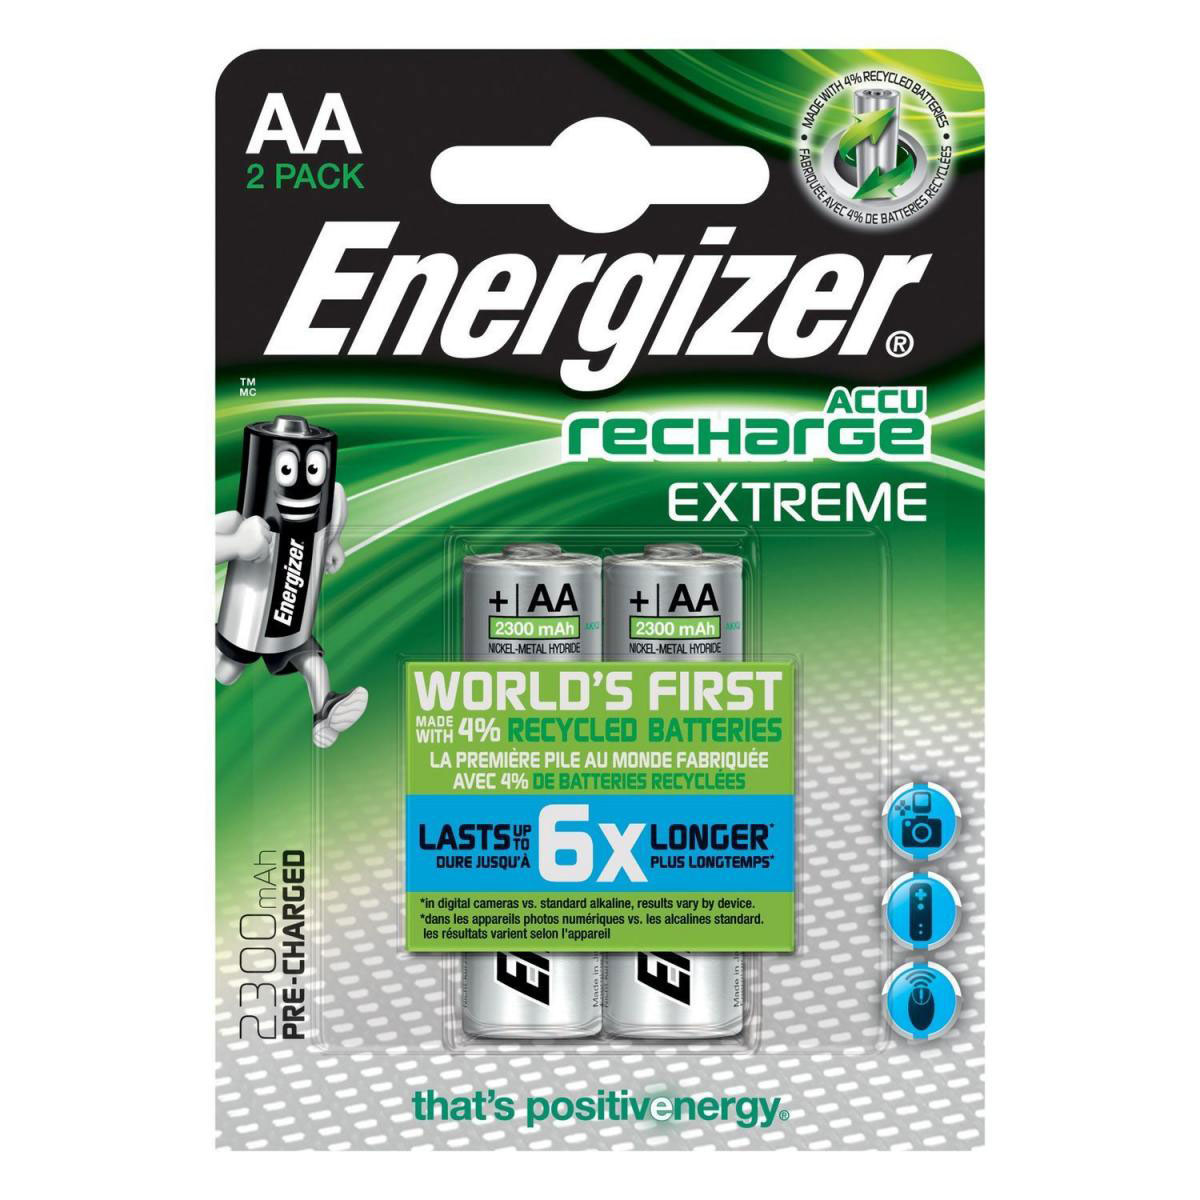 ENERGIZER - Batterie Alkaline A23 12V 2 Stück